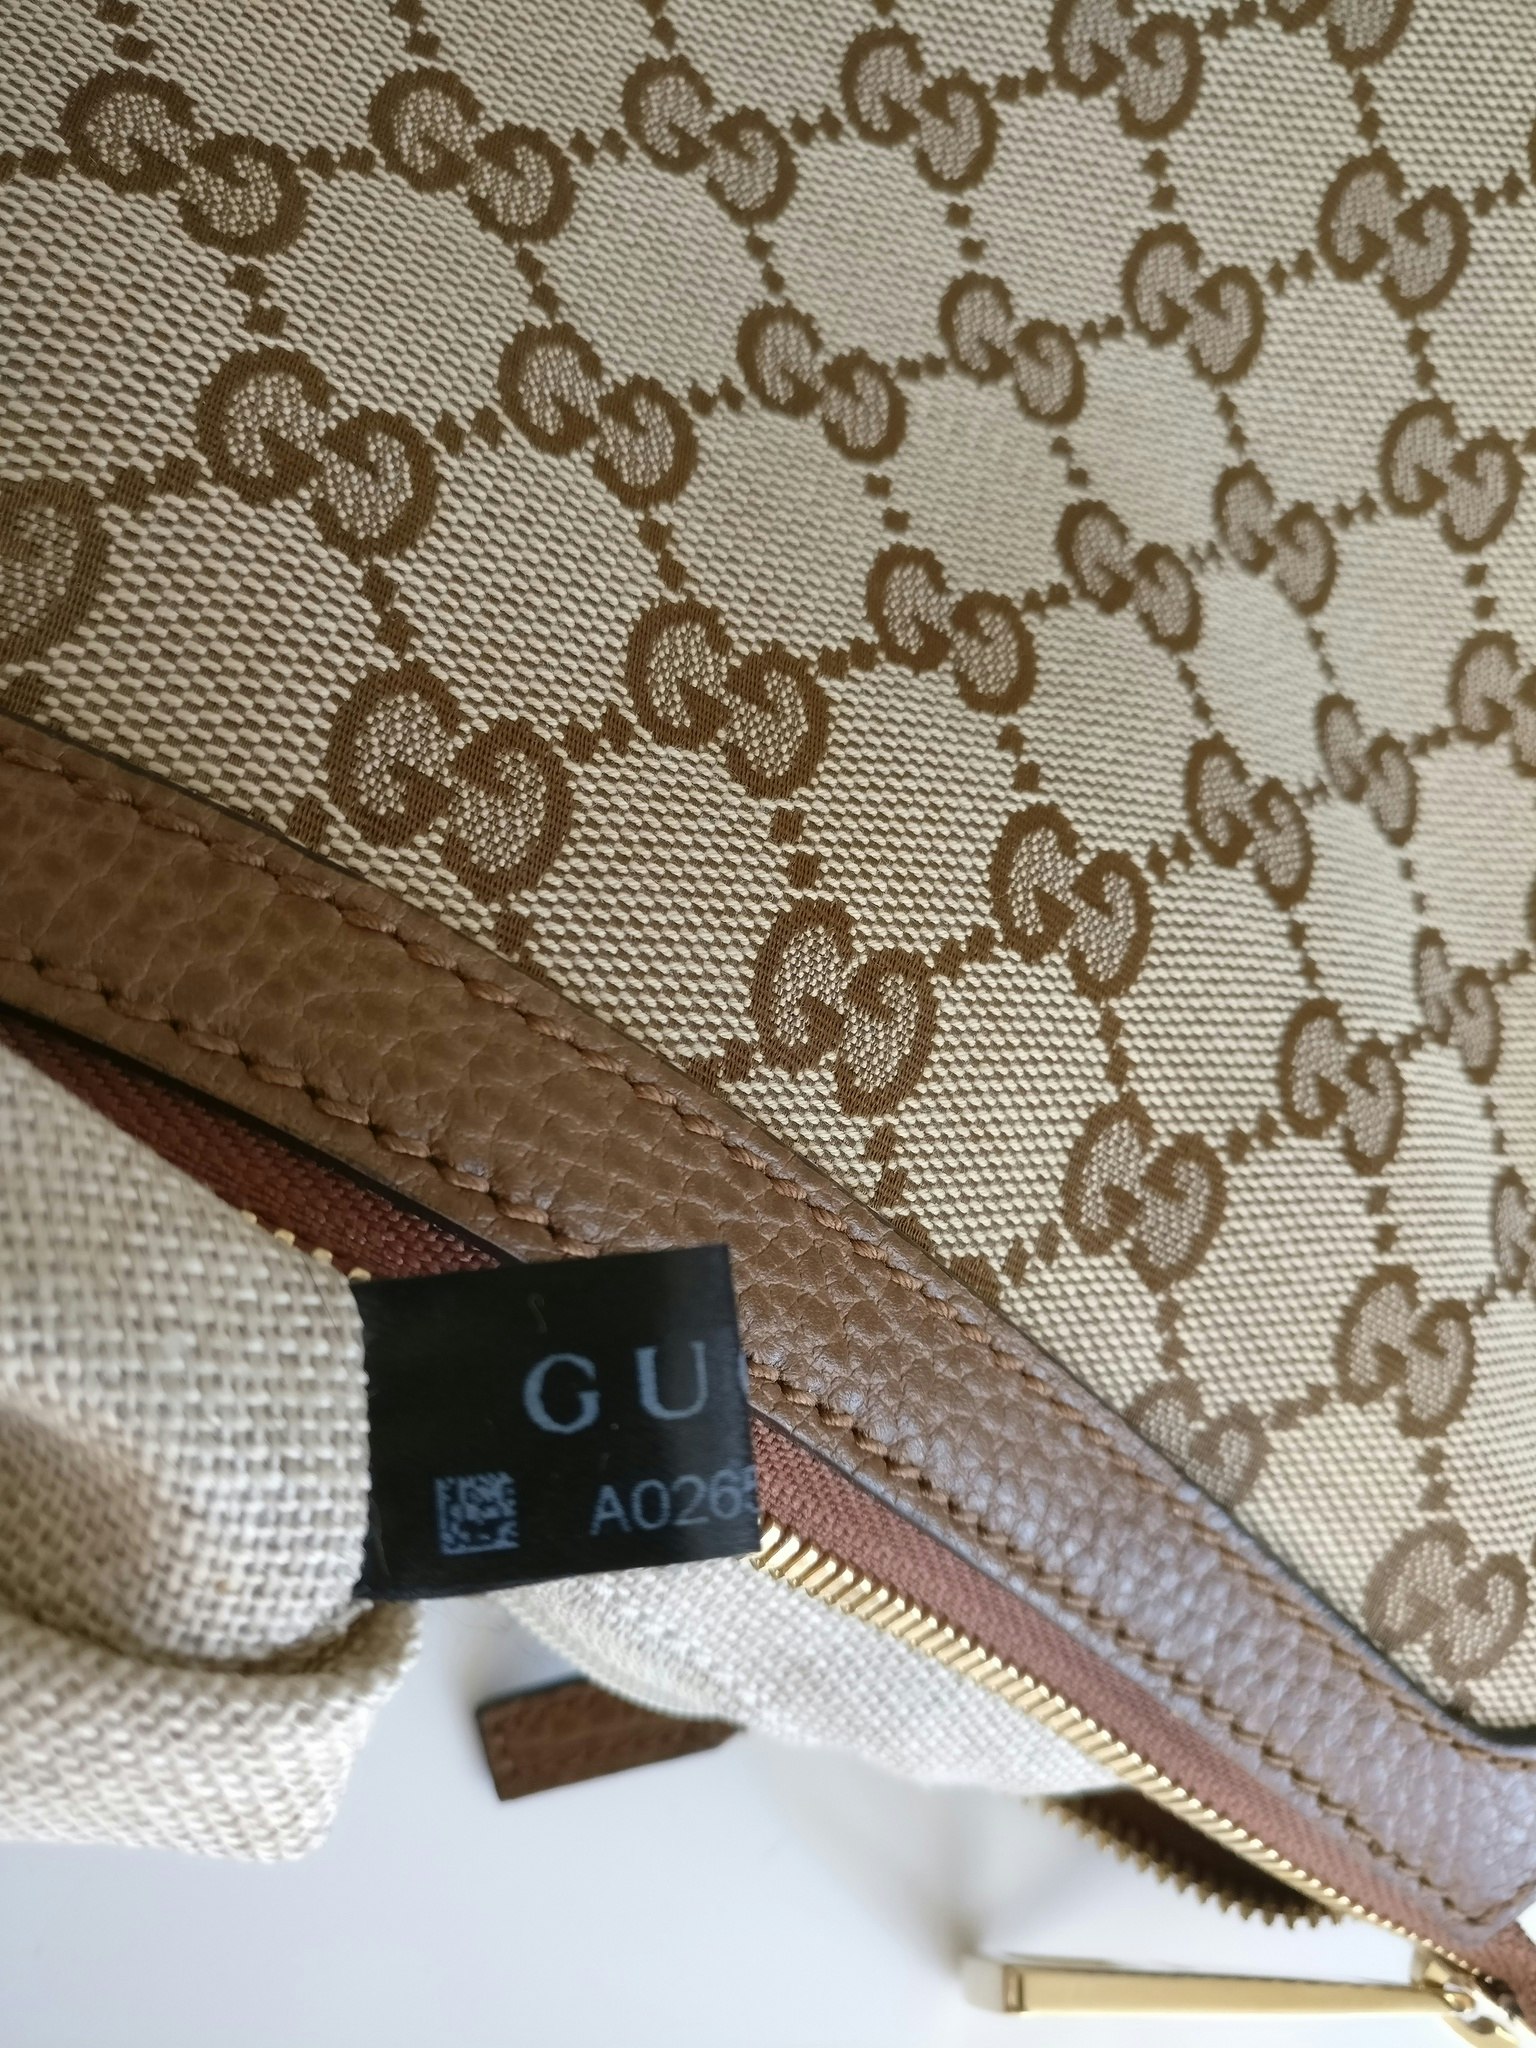 Gucci Bree Hobo large - Good or Bag